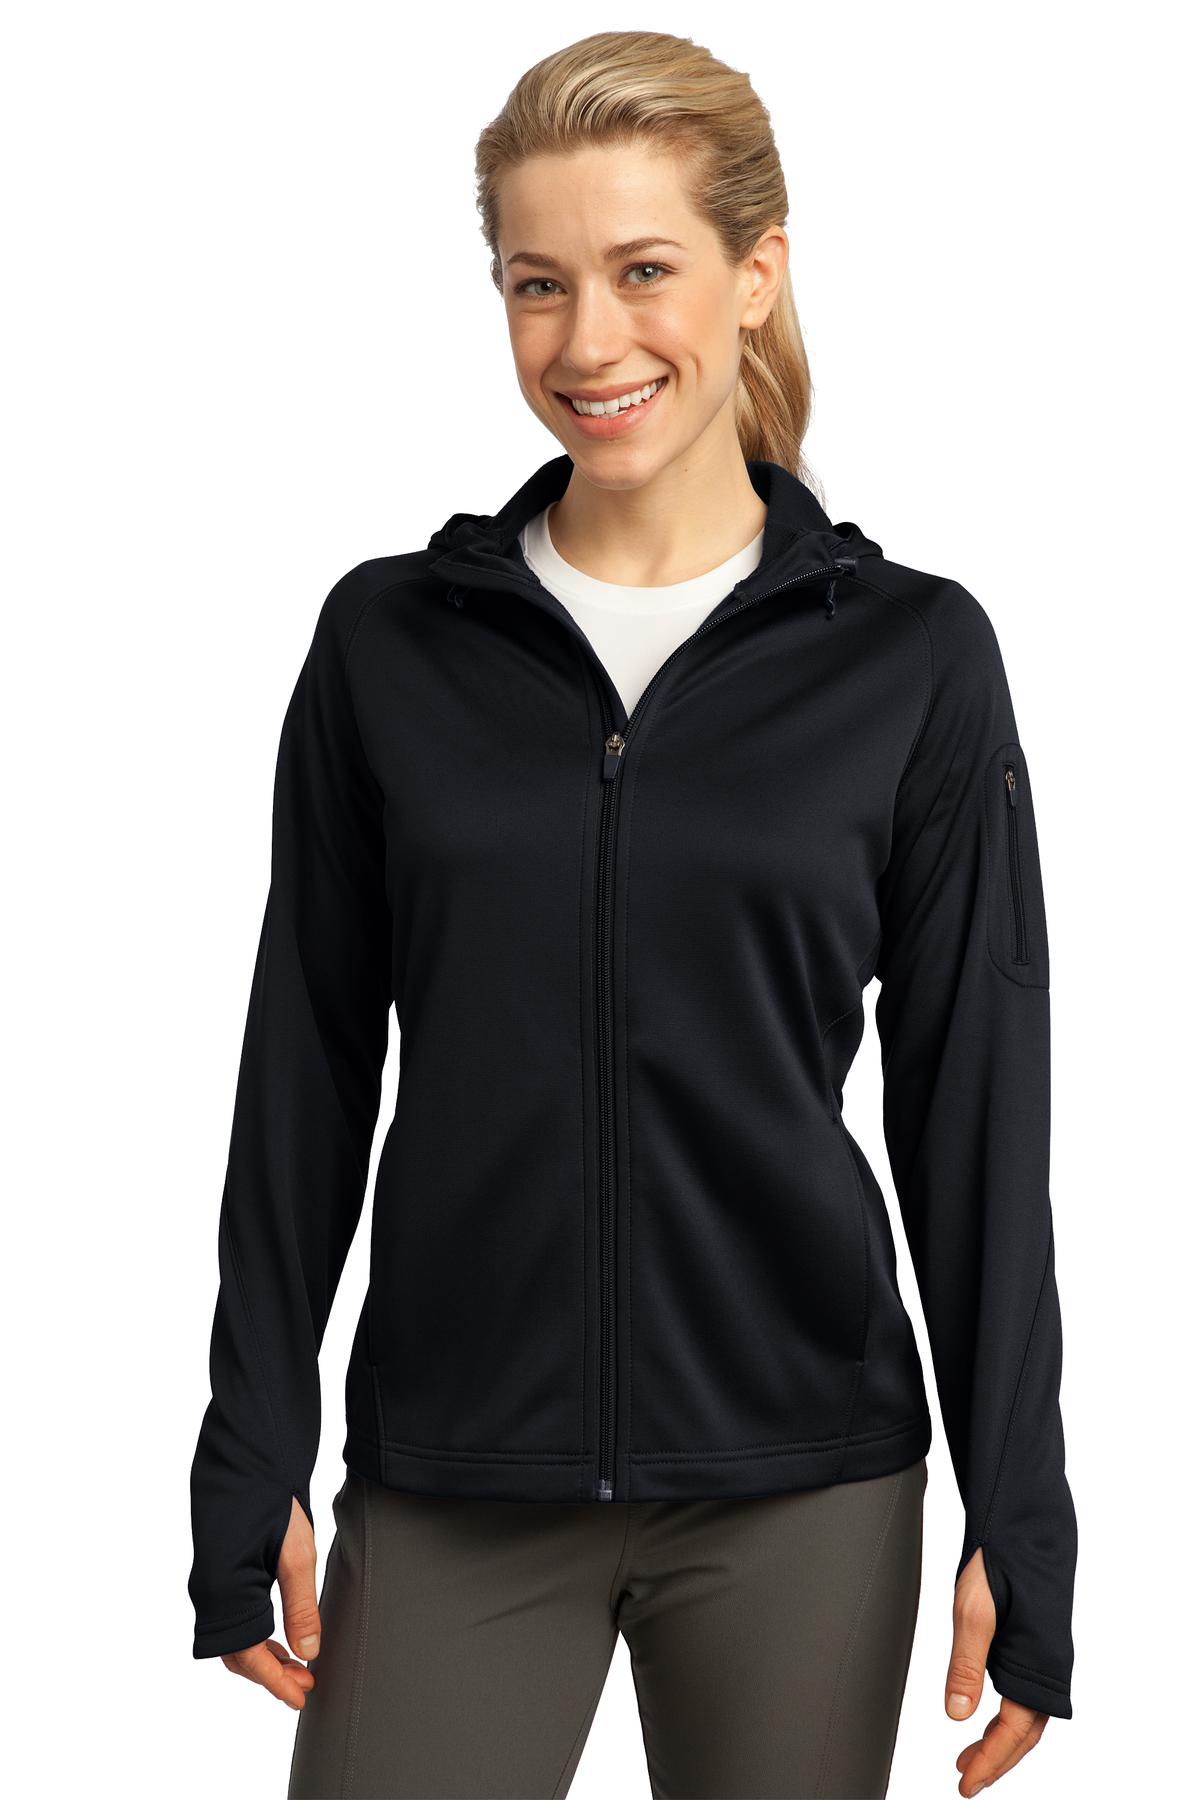 Sport-Tek Ladies Tech Fleece Full-Zip Hooded Jacket - image 1 of 1